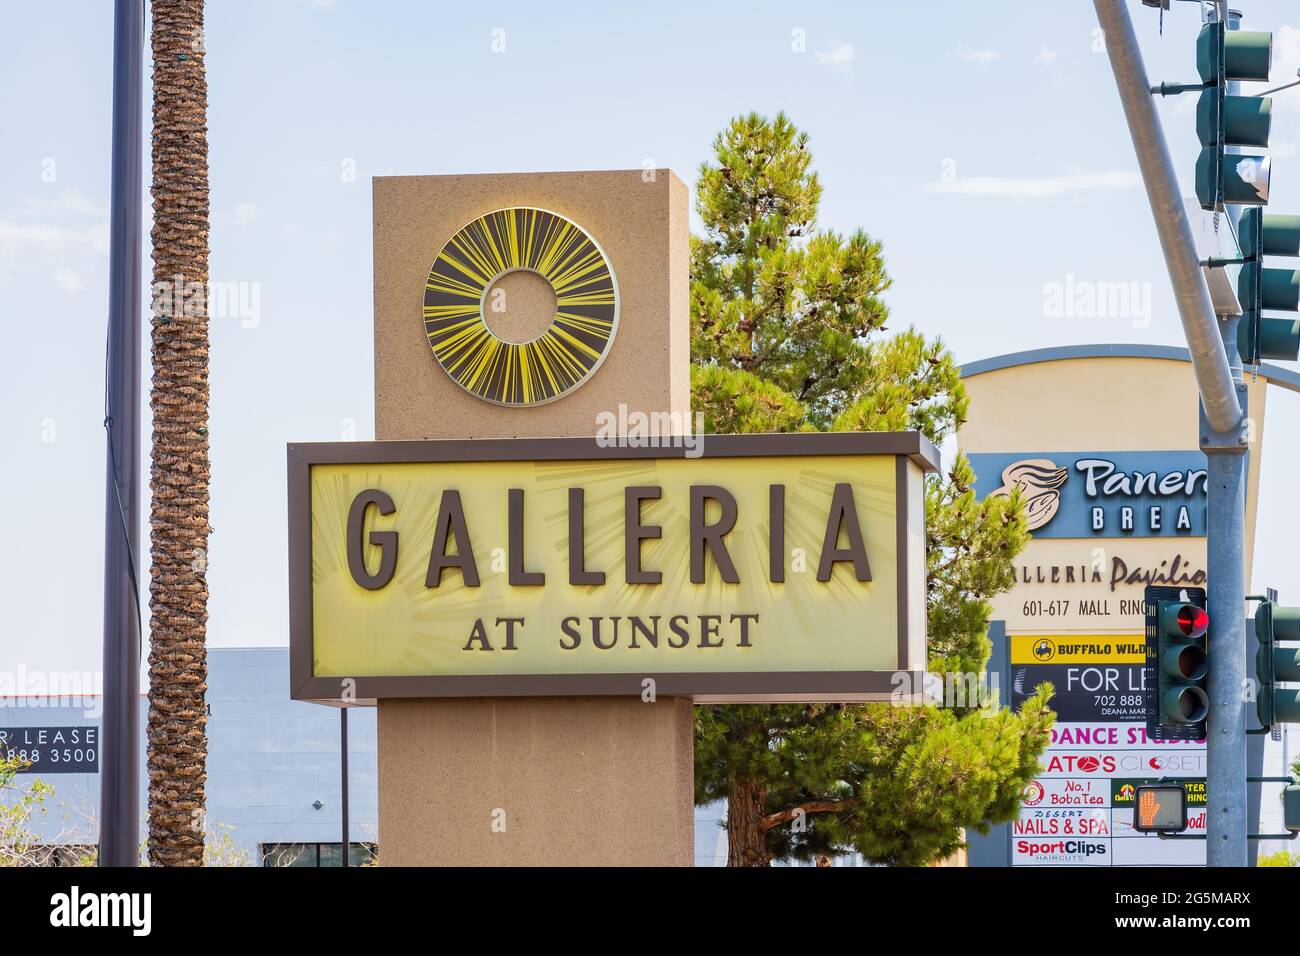 Las Vegas, JUN 18, 2021 - Sign of the Galleria at Sunset shopping